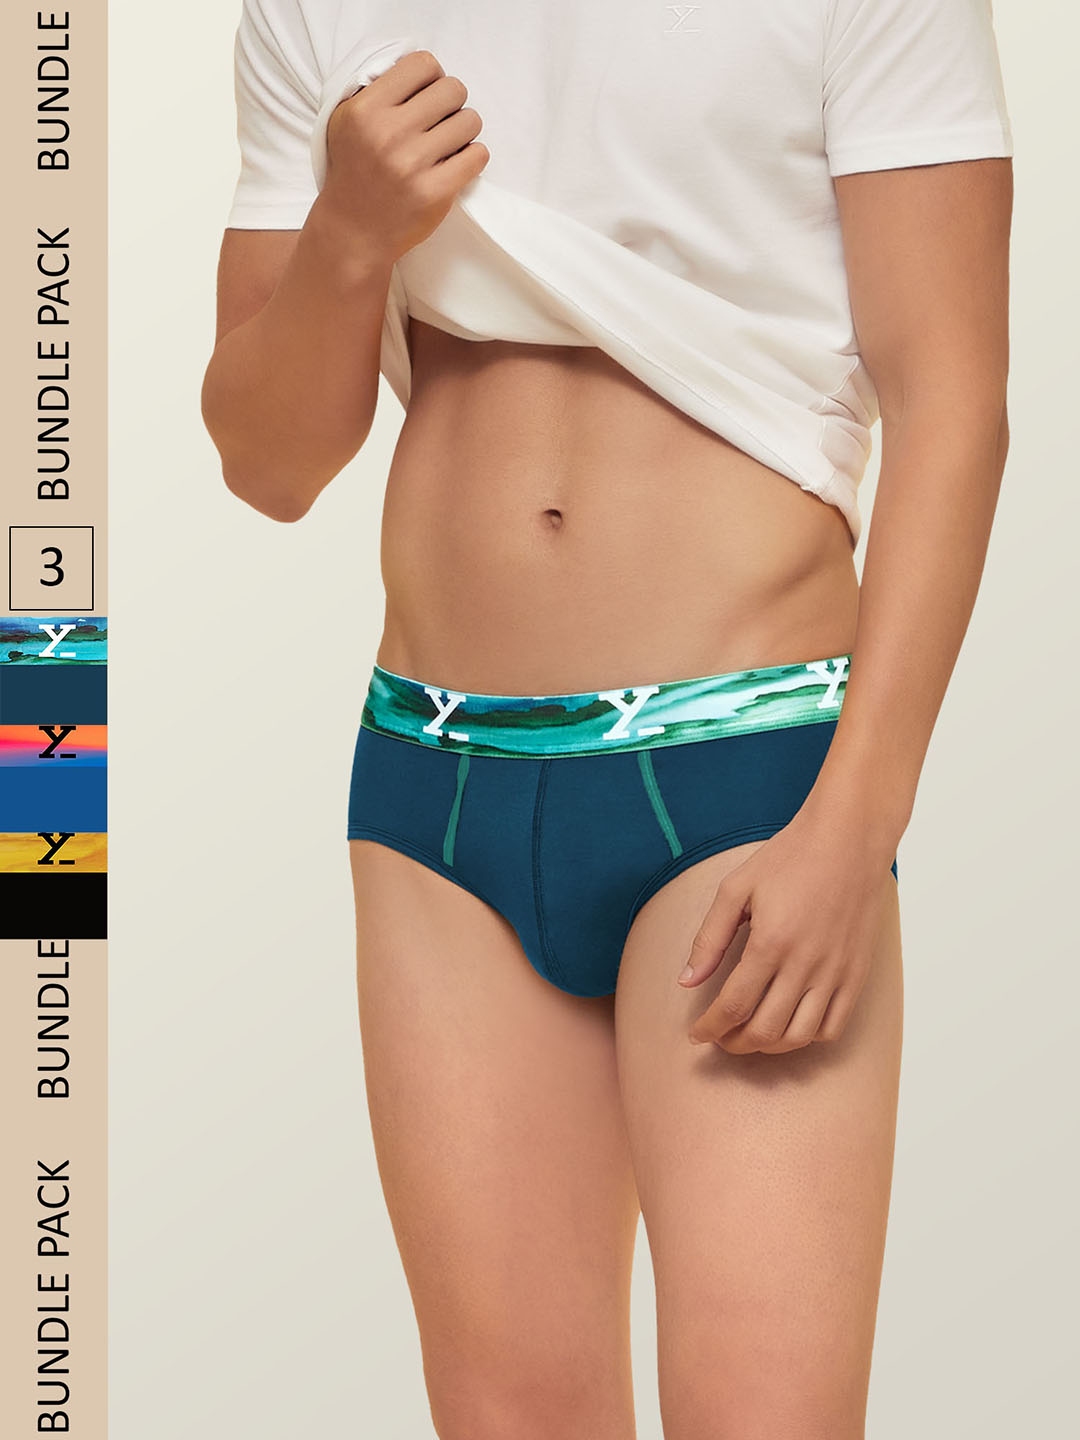 Buy XYXX Men's Underwear Dynamo IntelliSoft Antimicrobial Micro